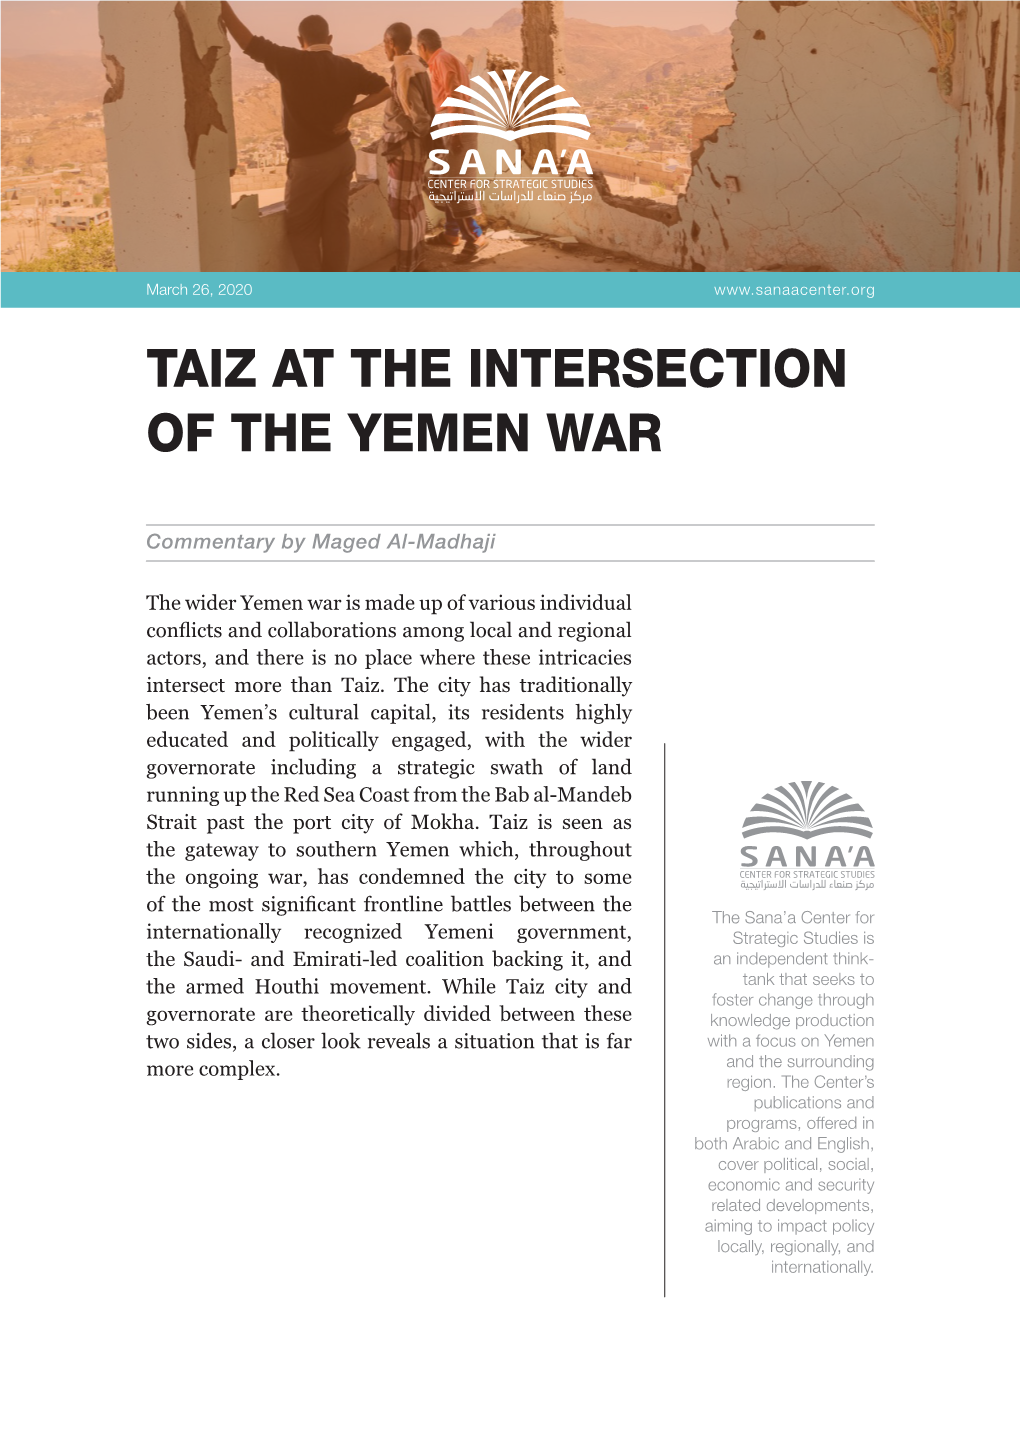 Taiz at the Intersection of the Yemen War